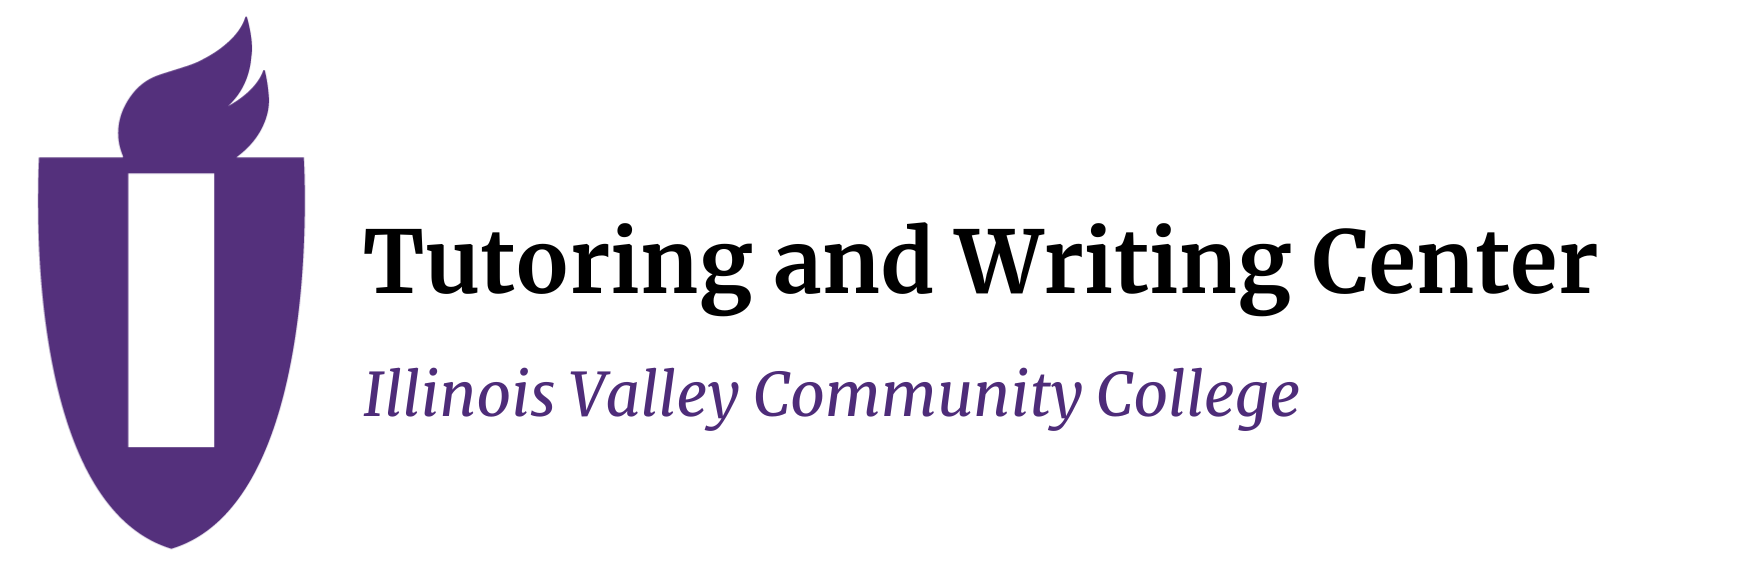 IVCC Tutoring and Writing Center logo